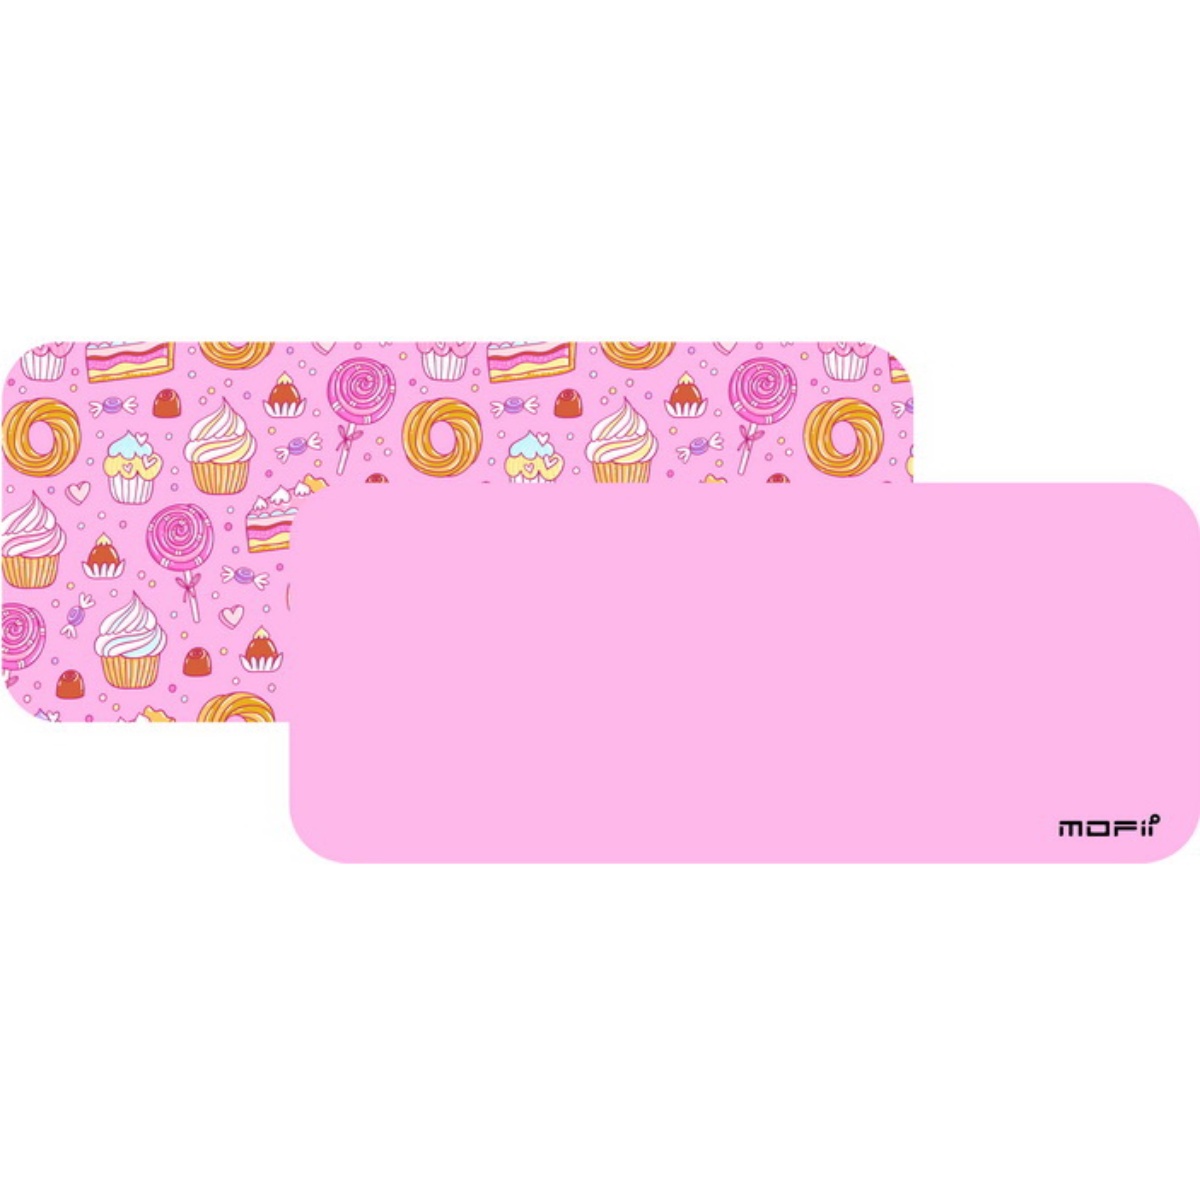 Mofii Mouse Pad (Pink) TORTILLA PINK